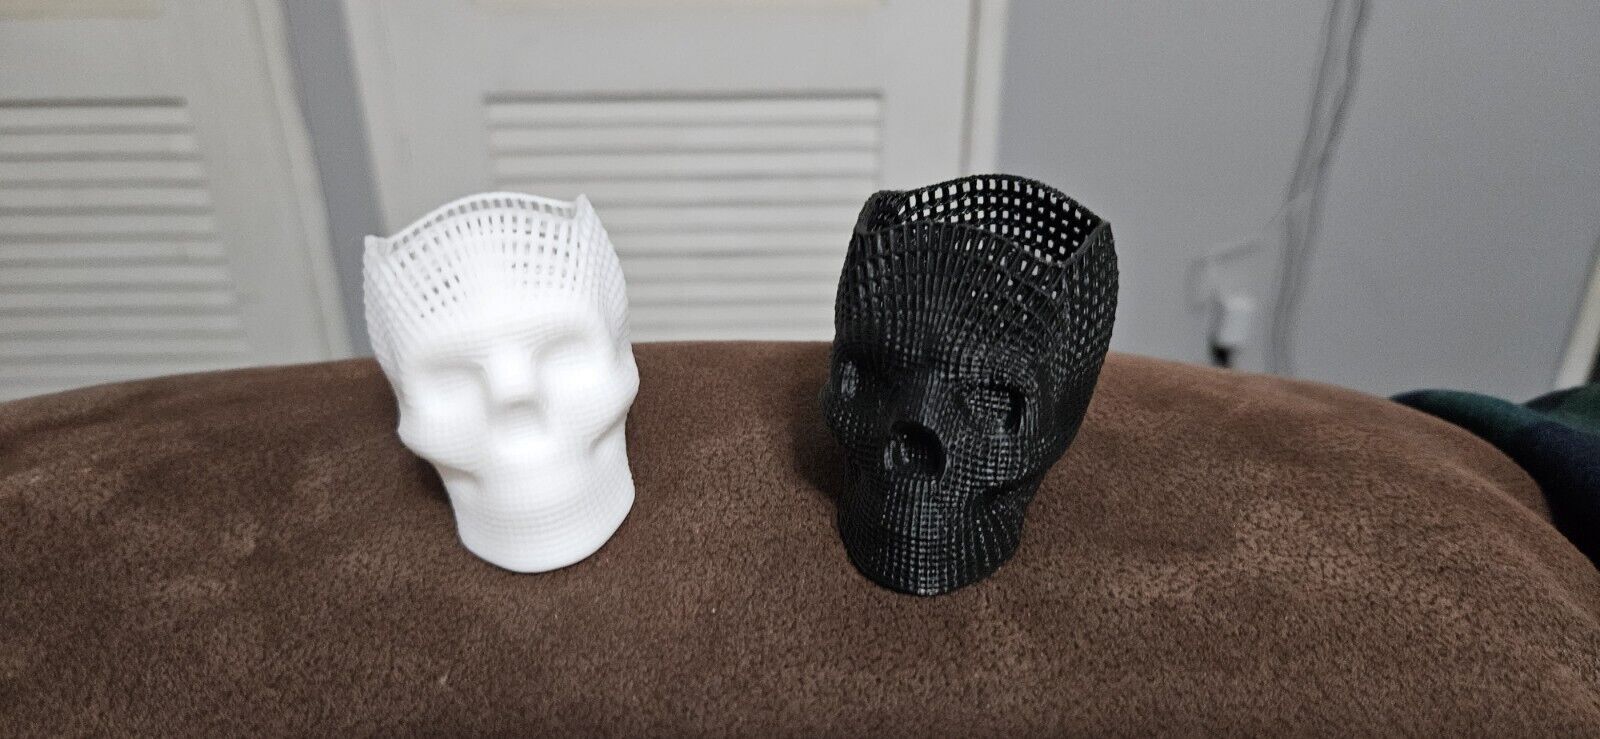 3d Printed Skull Set